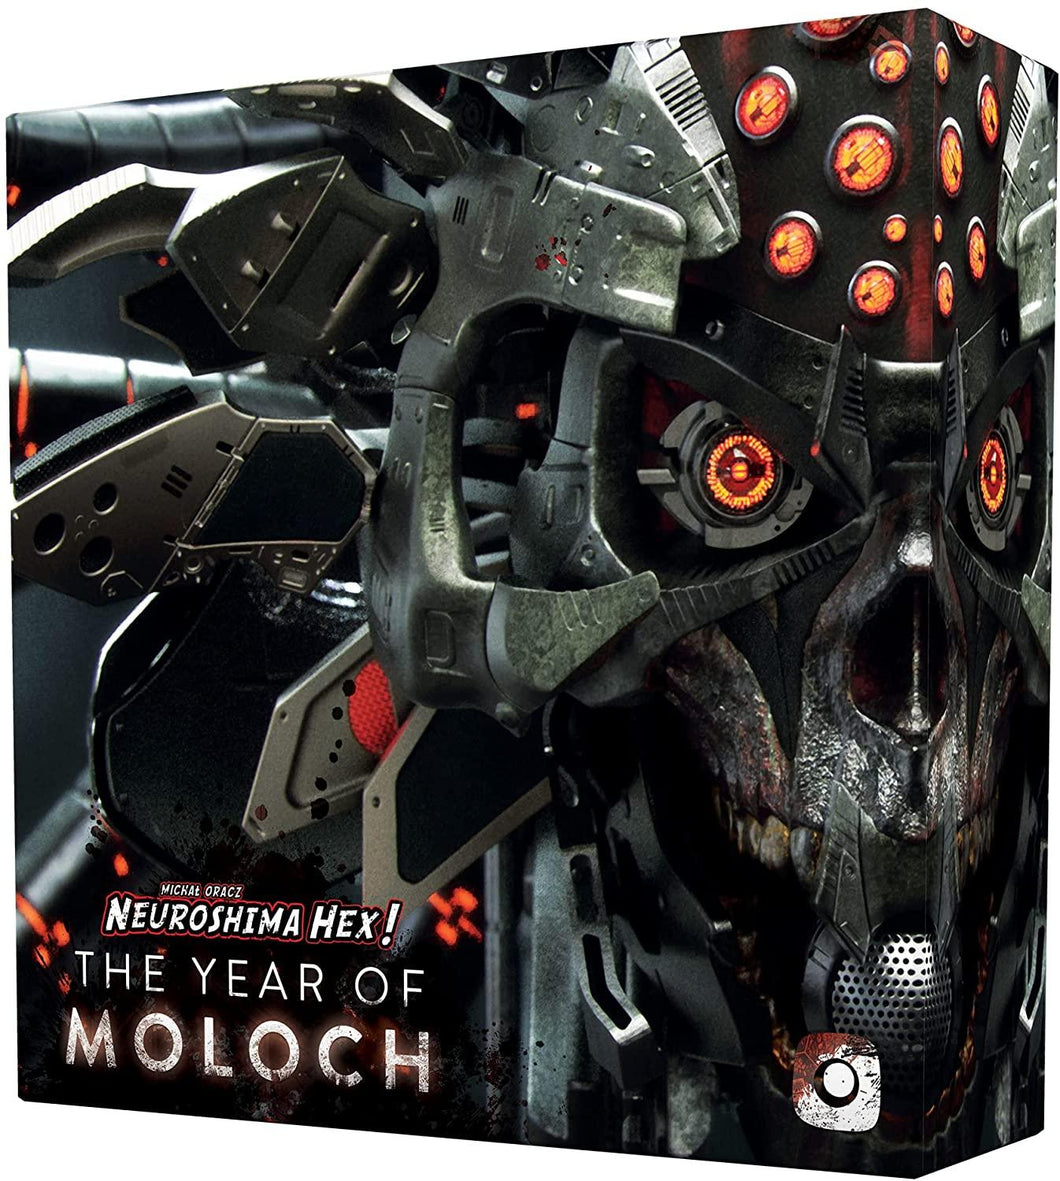 Neuroshima Hex 3.0: The Year of Moloch